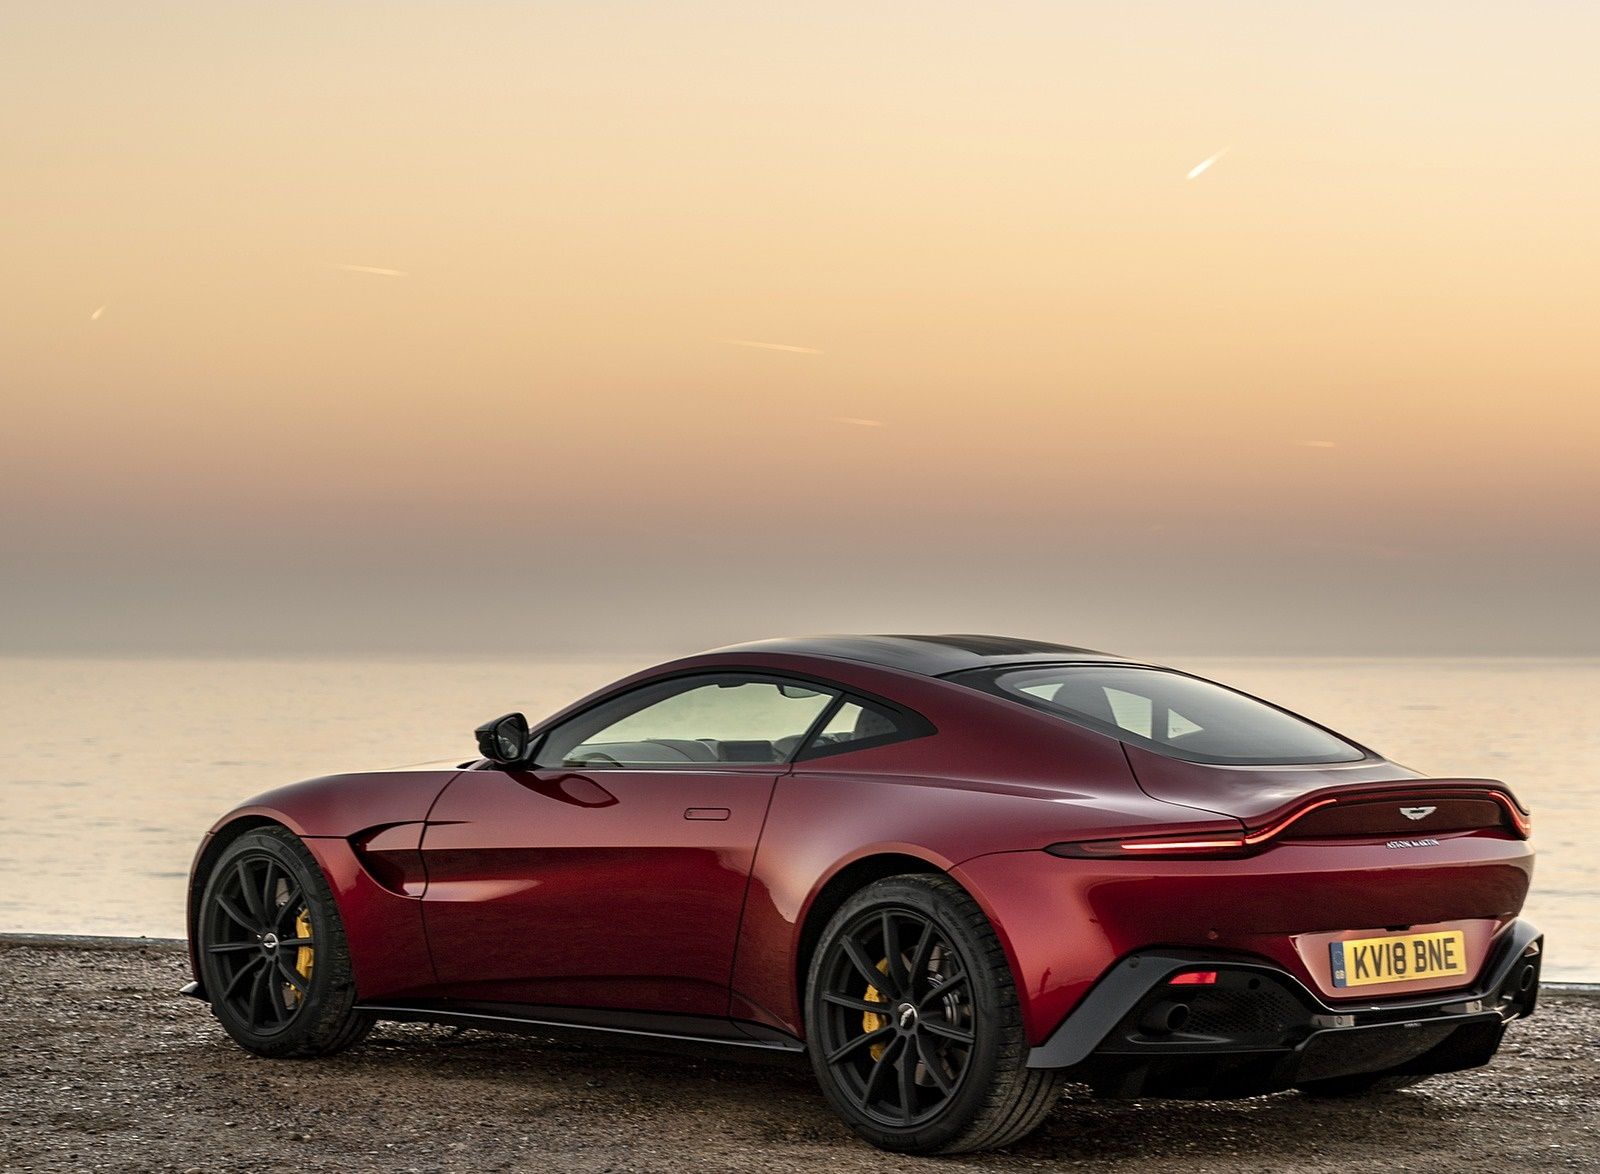 2019 Aston Martin Vantage (UK-Spec) Fondos de parachoques trasero (58